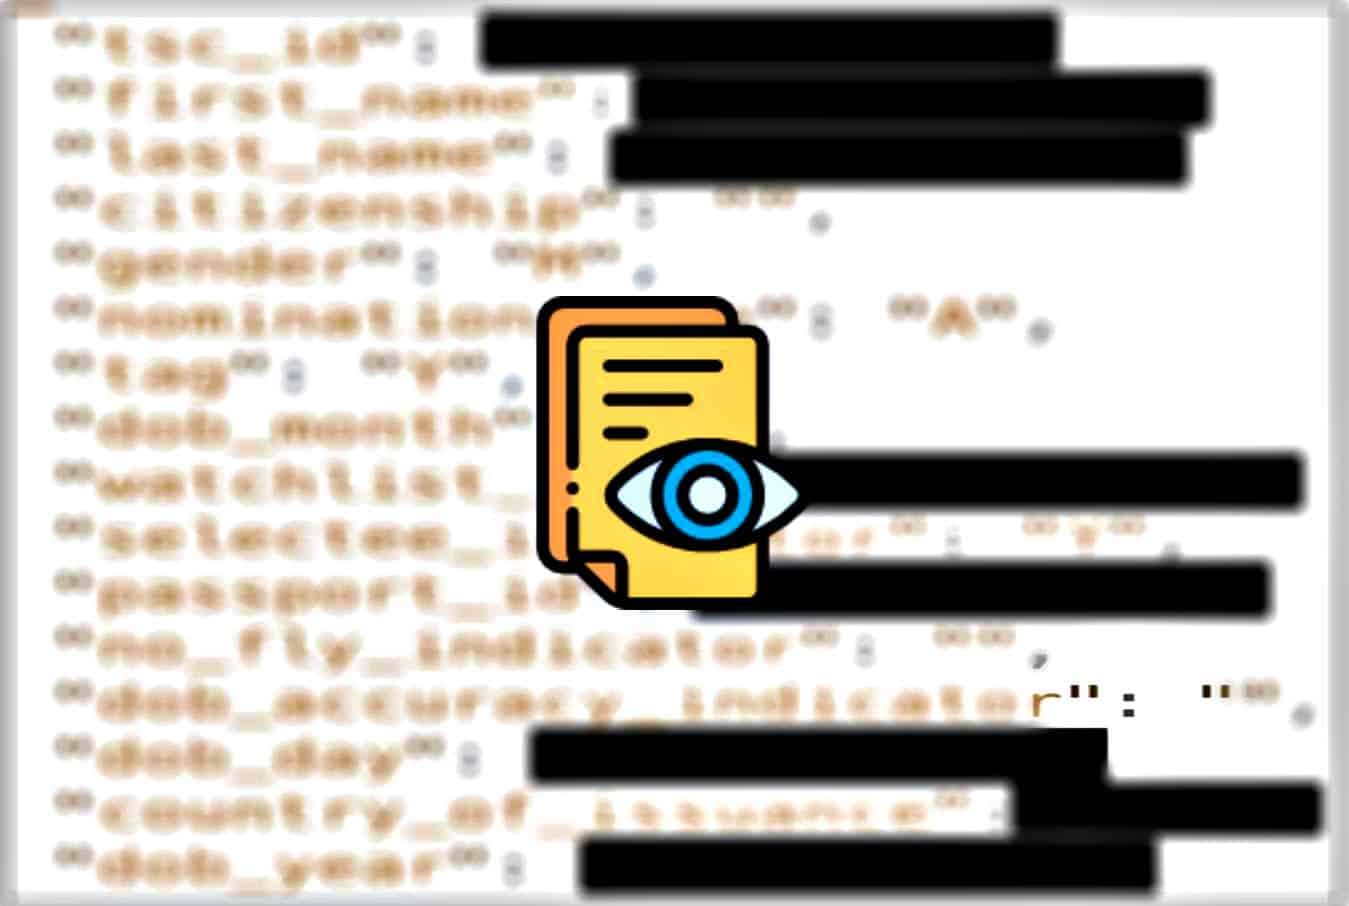 FBI's secret terrorist watchlist with 2 Million records exposed online